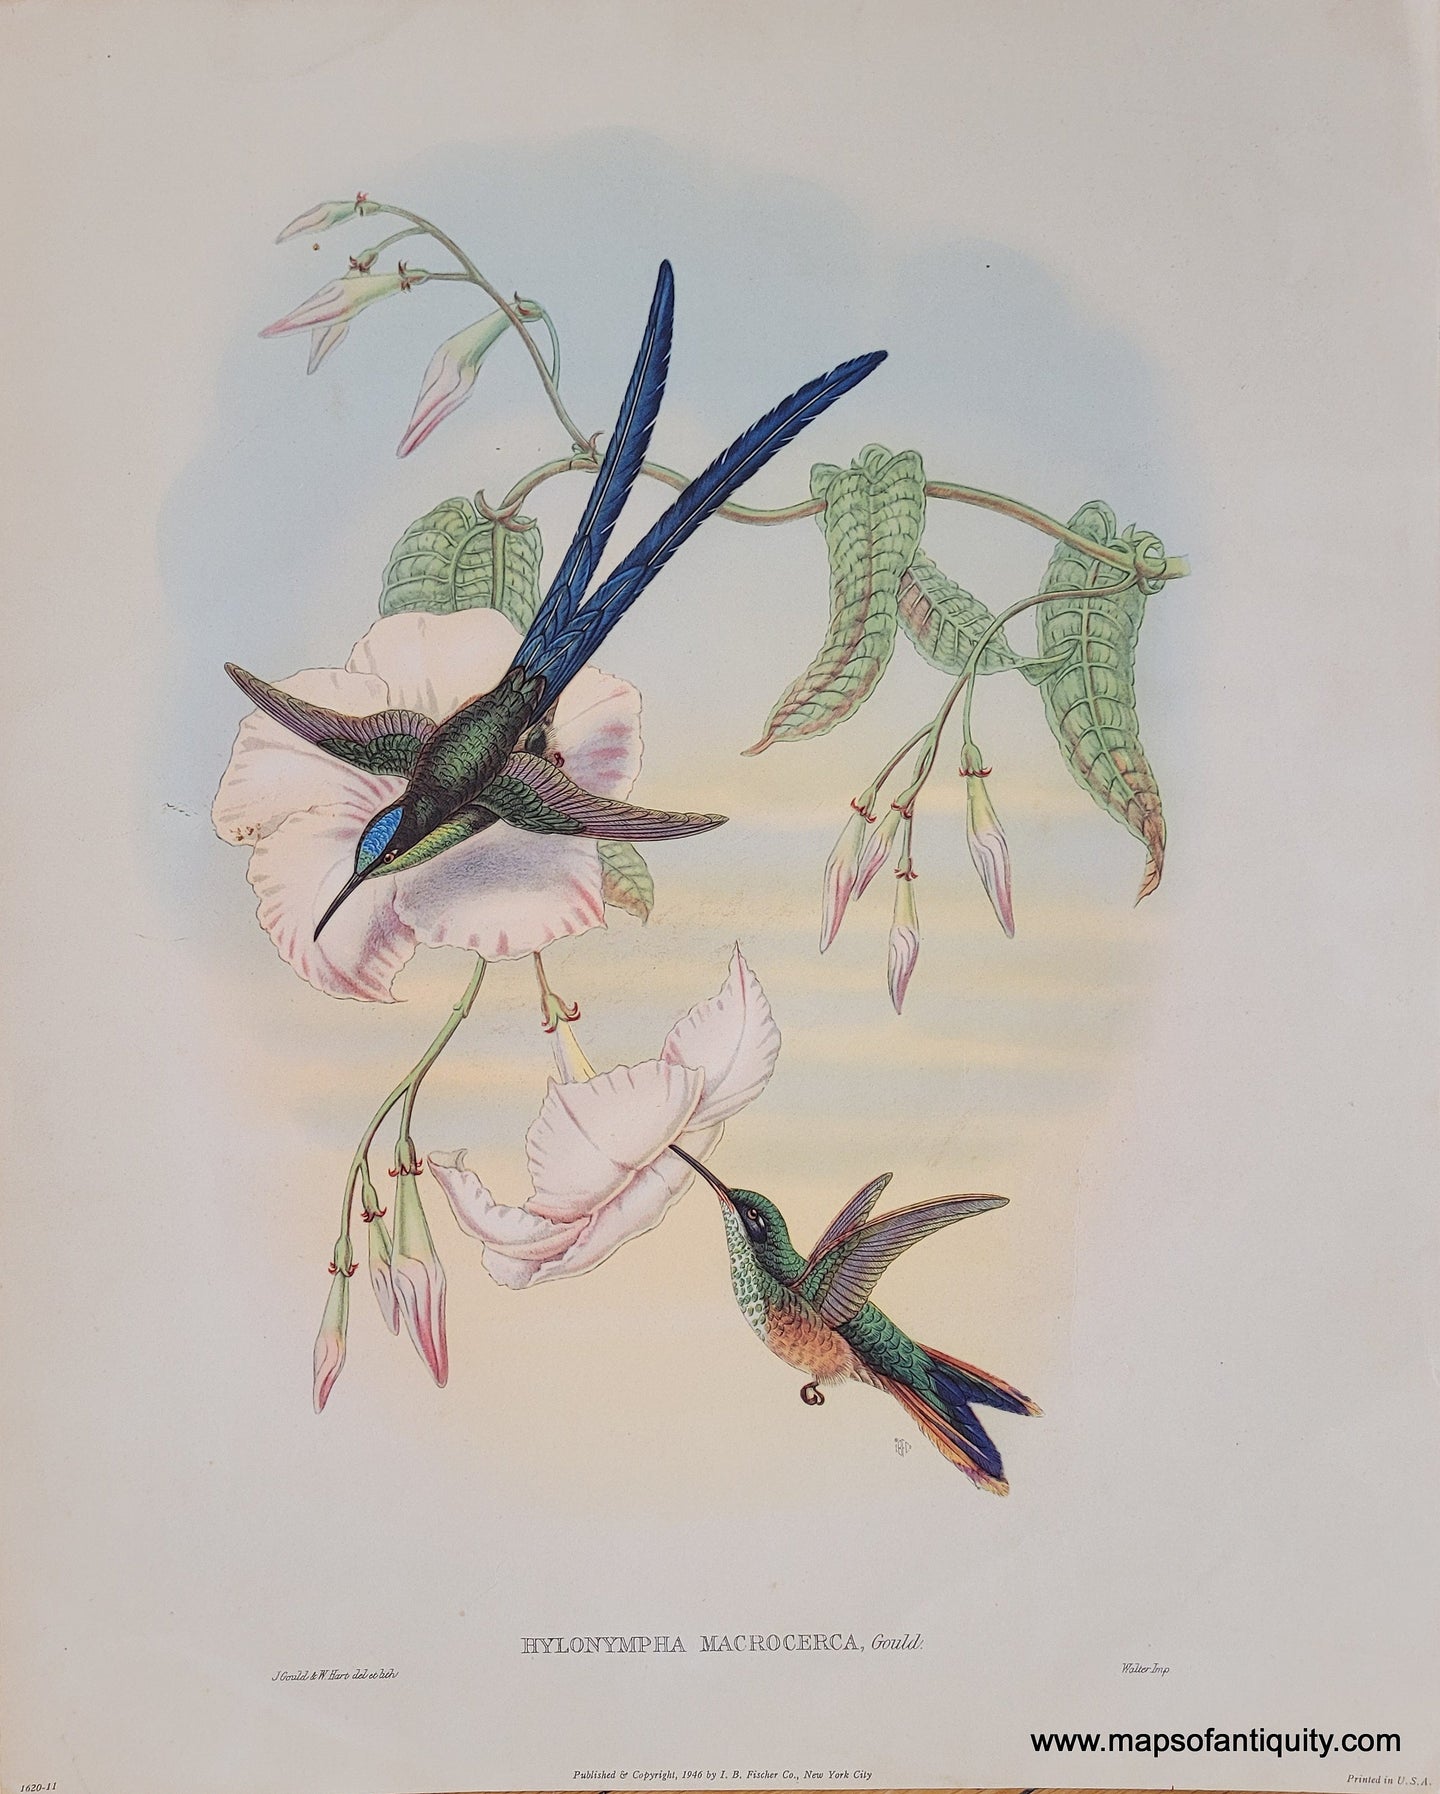 Genuine-Vintage-Print-Hummingbirds---Hylonympha-Macrocerca-Gould-1946-I-B-Fischer-Co--Maps-Of-Antiquity